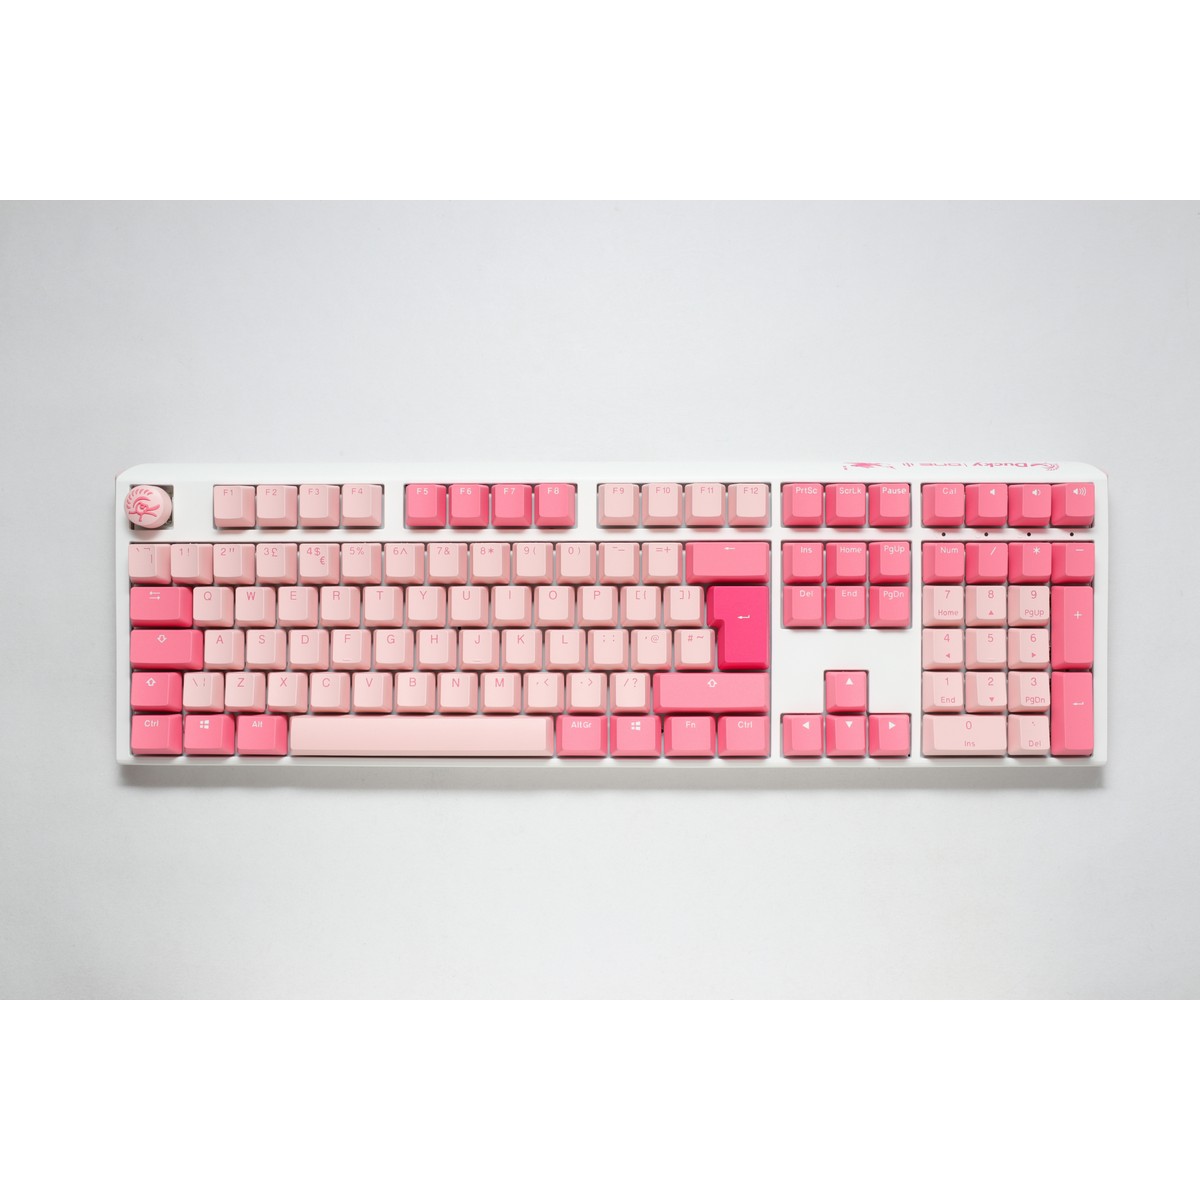 Ducky One 3 Gossamer Pink USB Cherry MX Red Mechanical Gaming Keyboard UK Layout